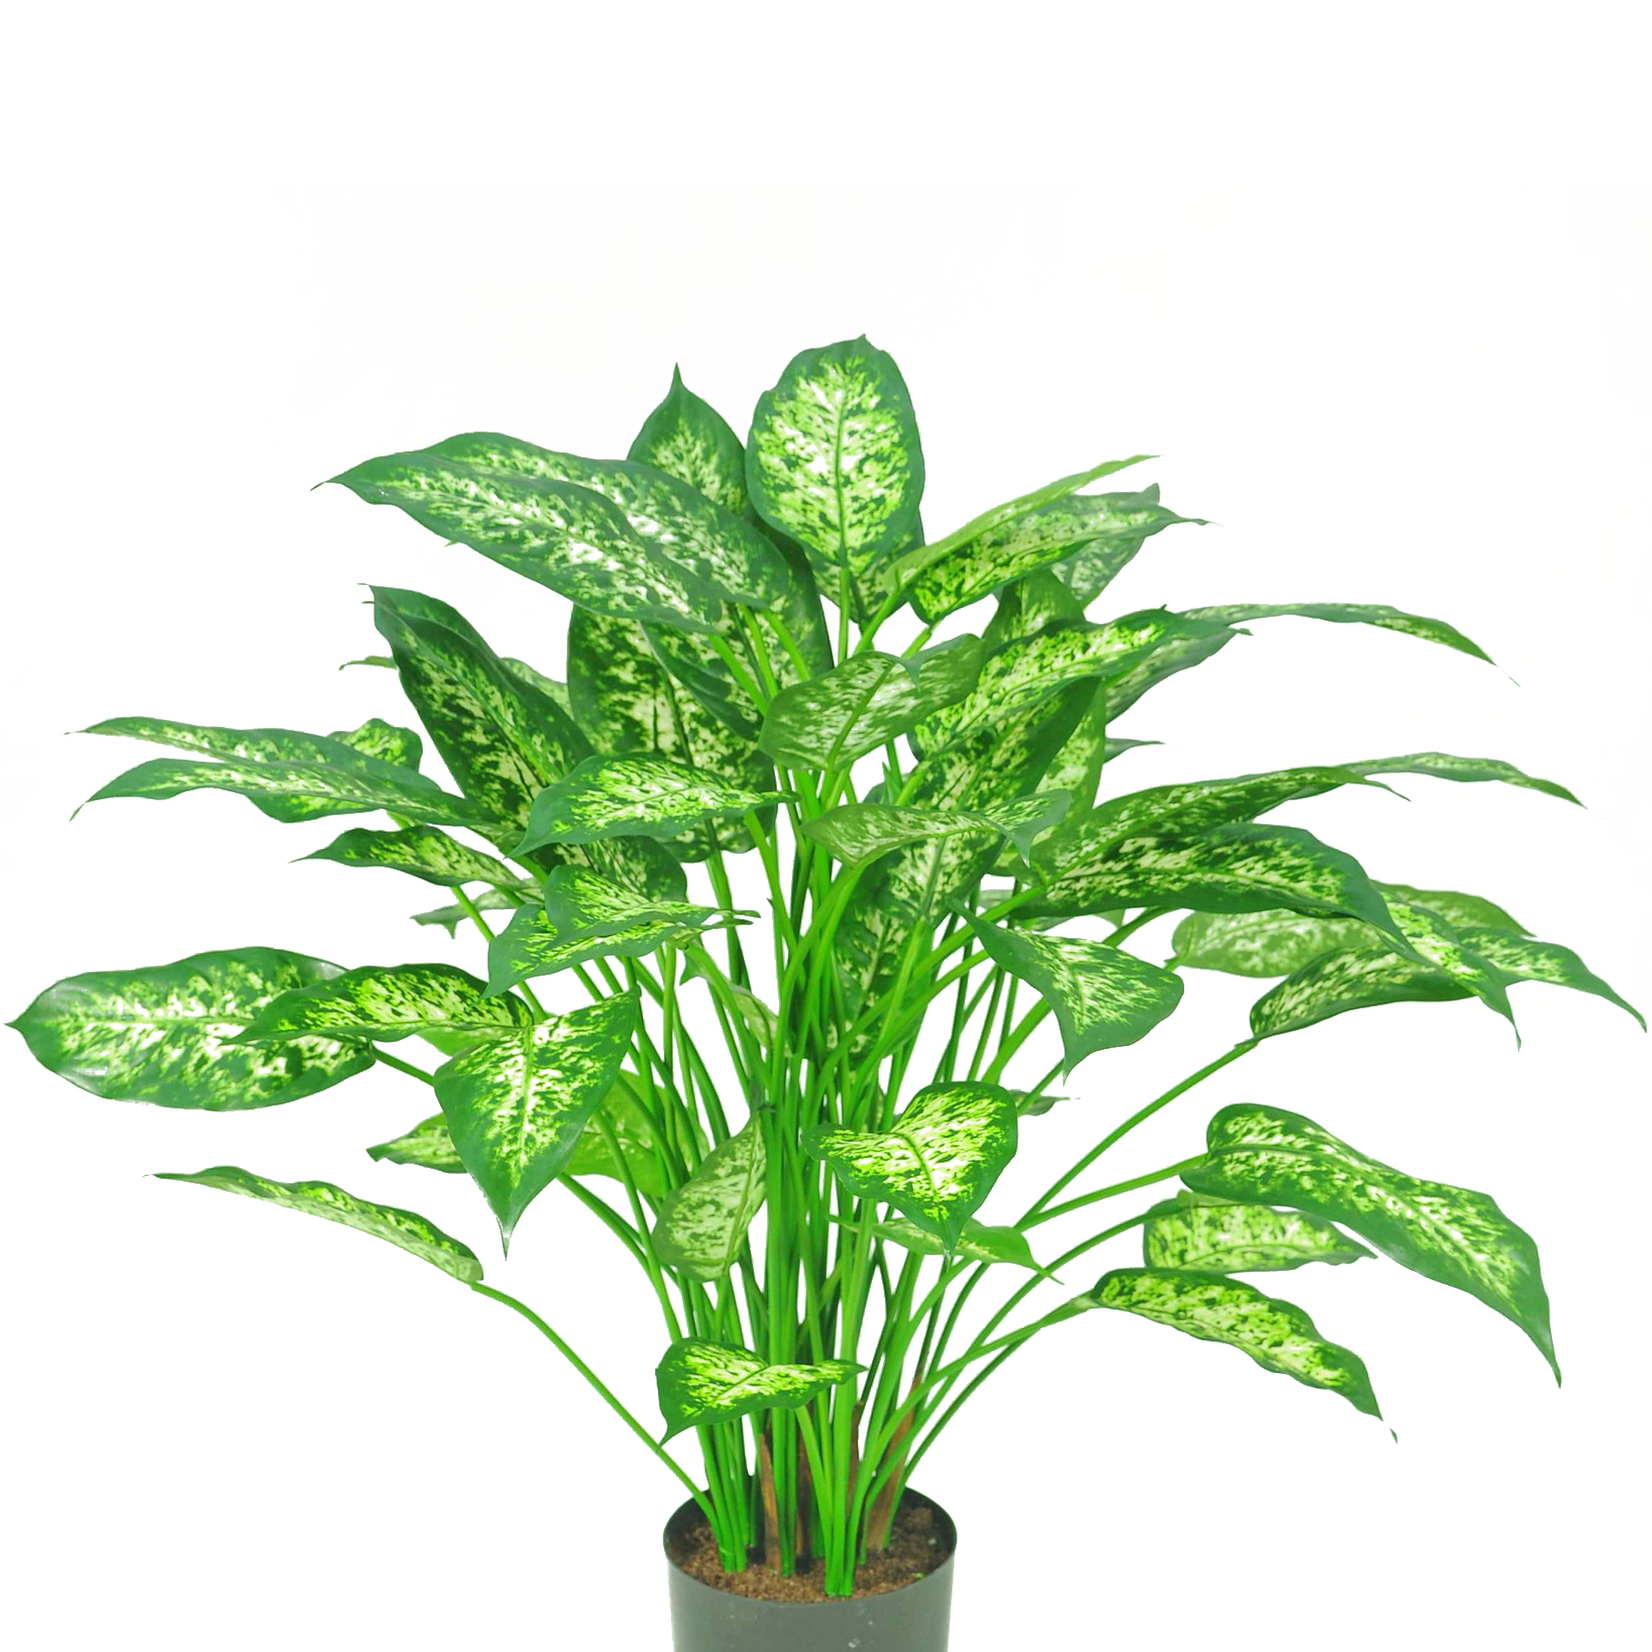 Greenmoods Kunstplant Dieffenbachia 75 cm